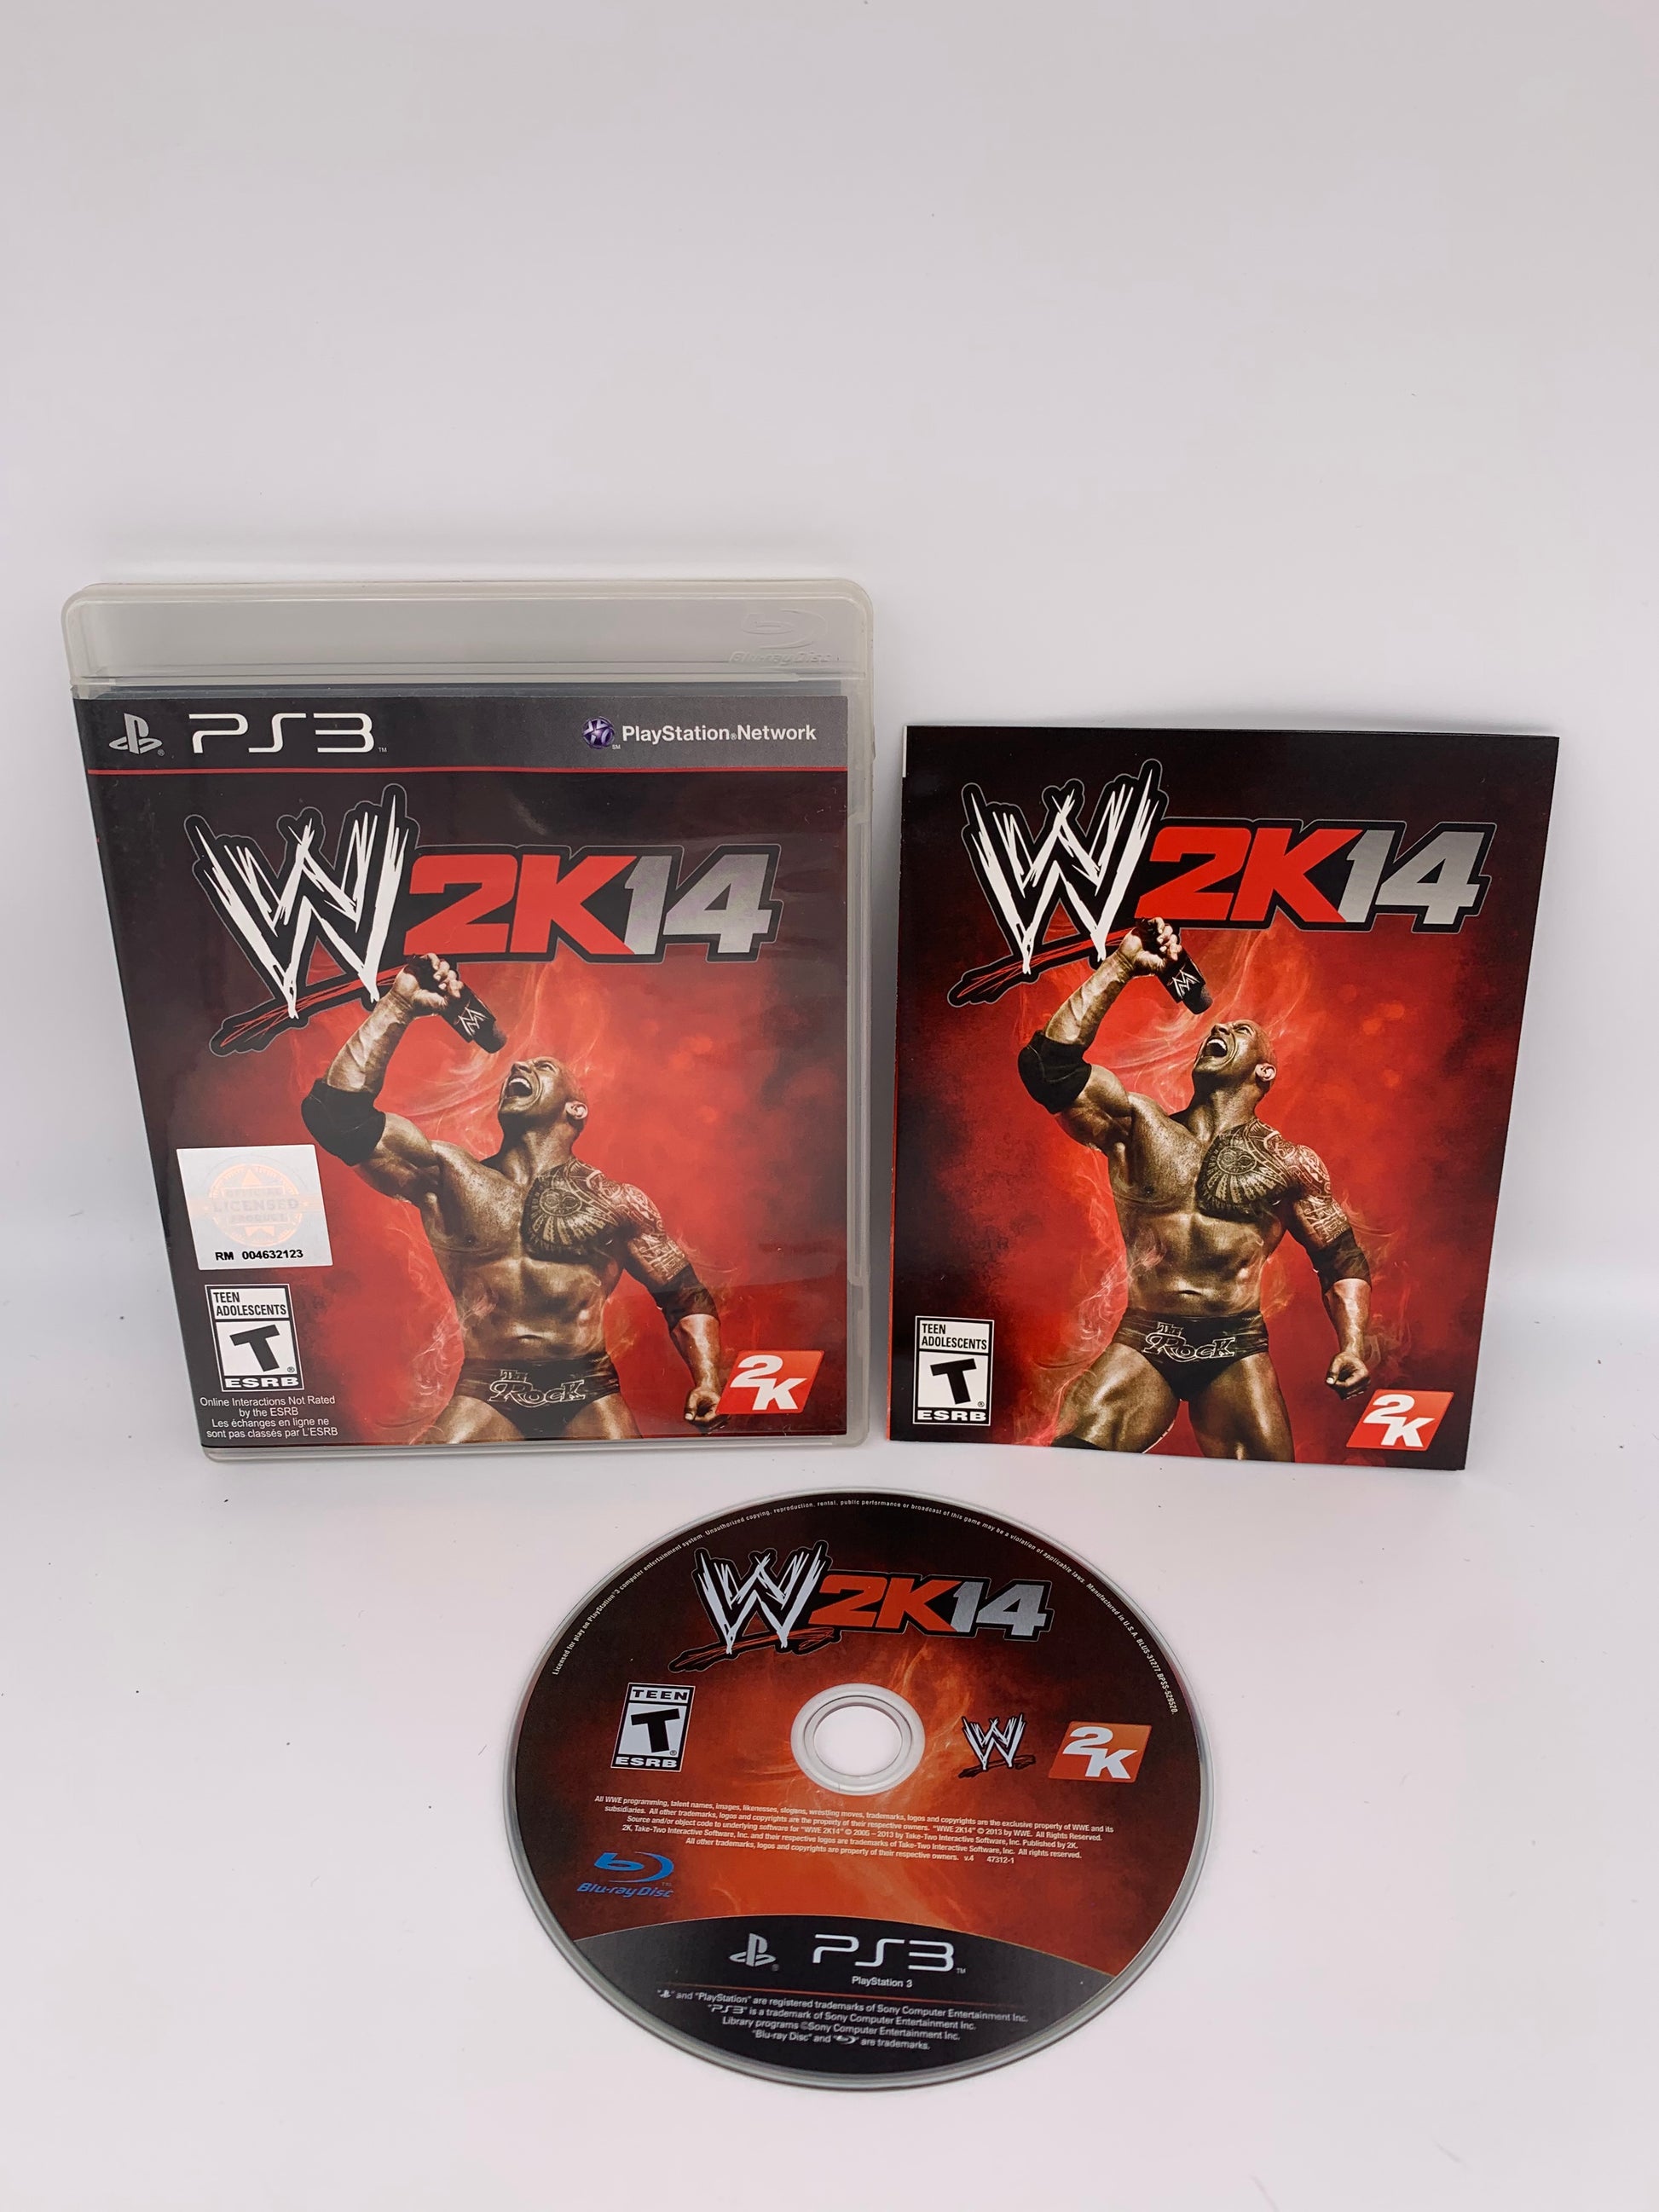 PiXEL-RETRO.COM : SONY PLAYSTATION 3 (PS3) COMPLET CIB BOX MANUAL GAME NTSC WWE 2K14